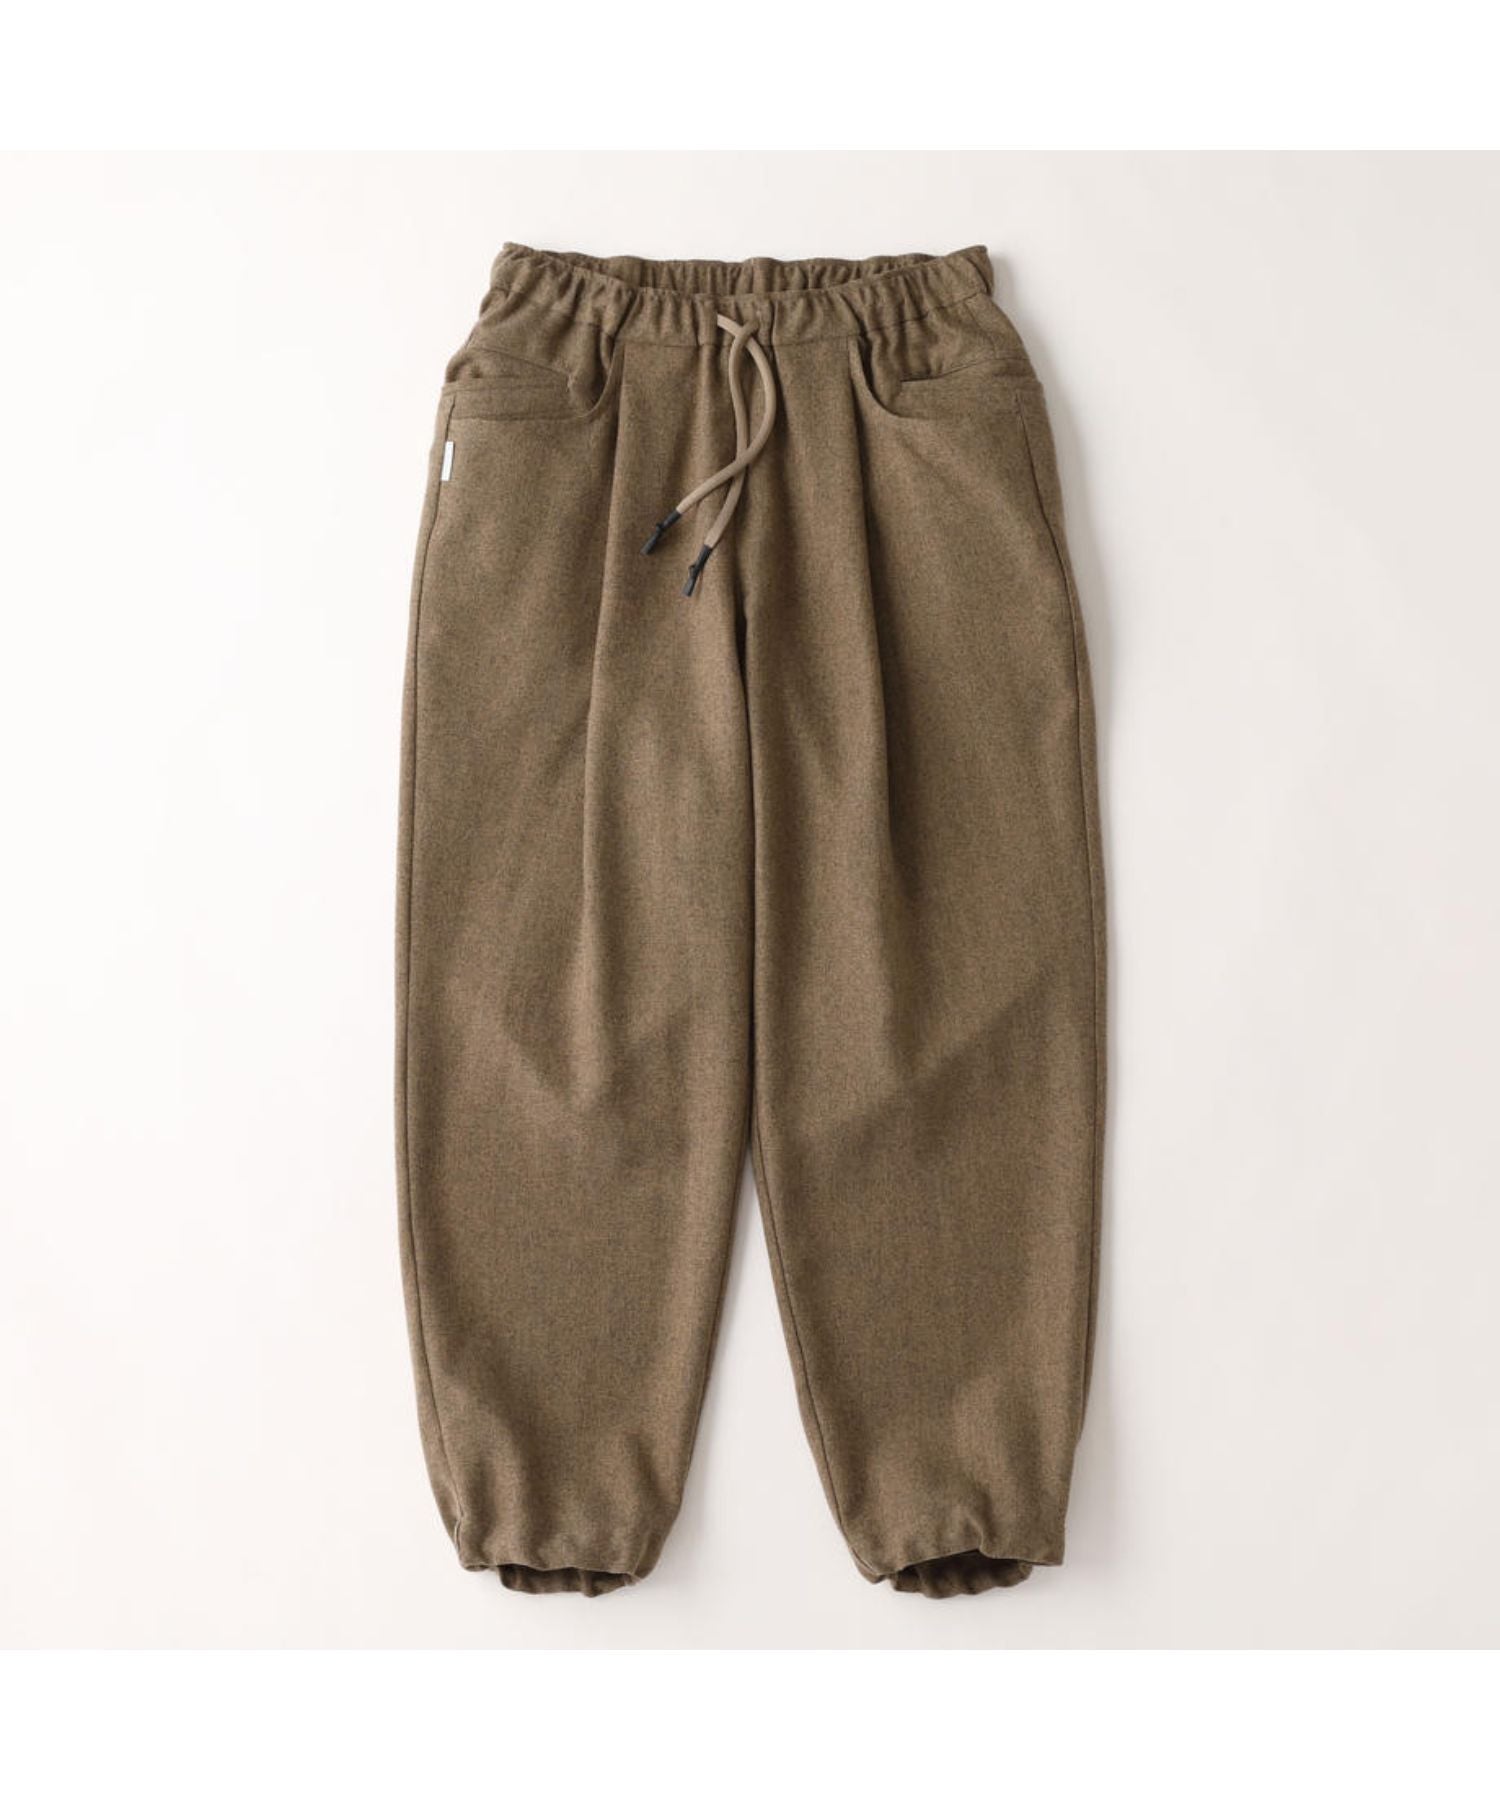 Wide Tapered Easy Pants (Woolherringbone) - S.F.C (Stripes For